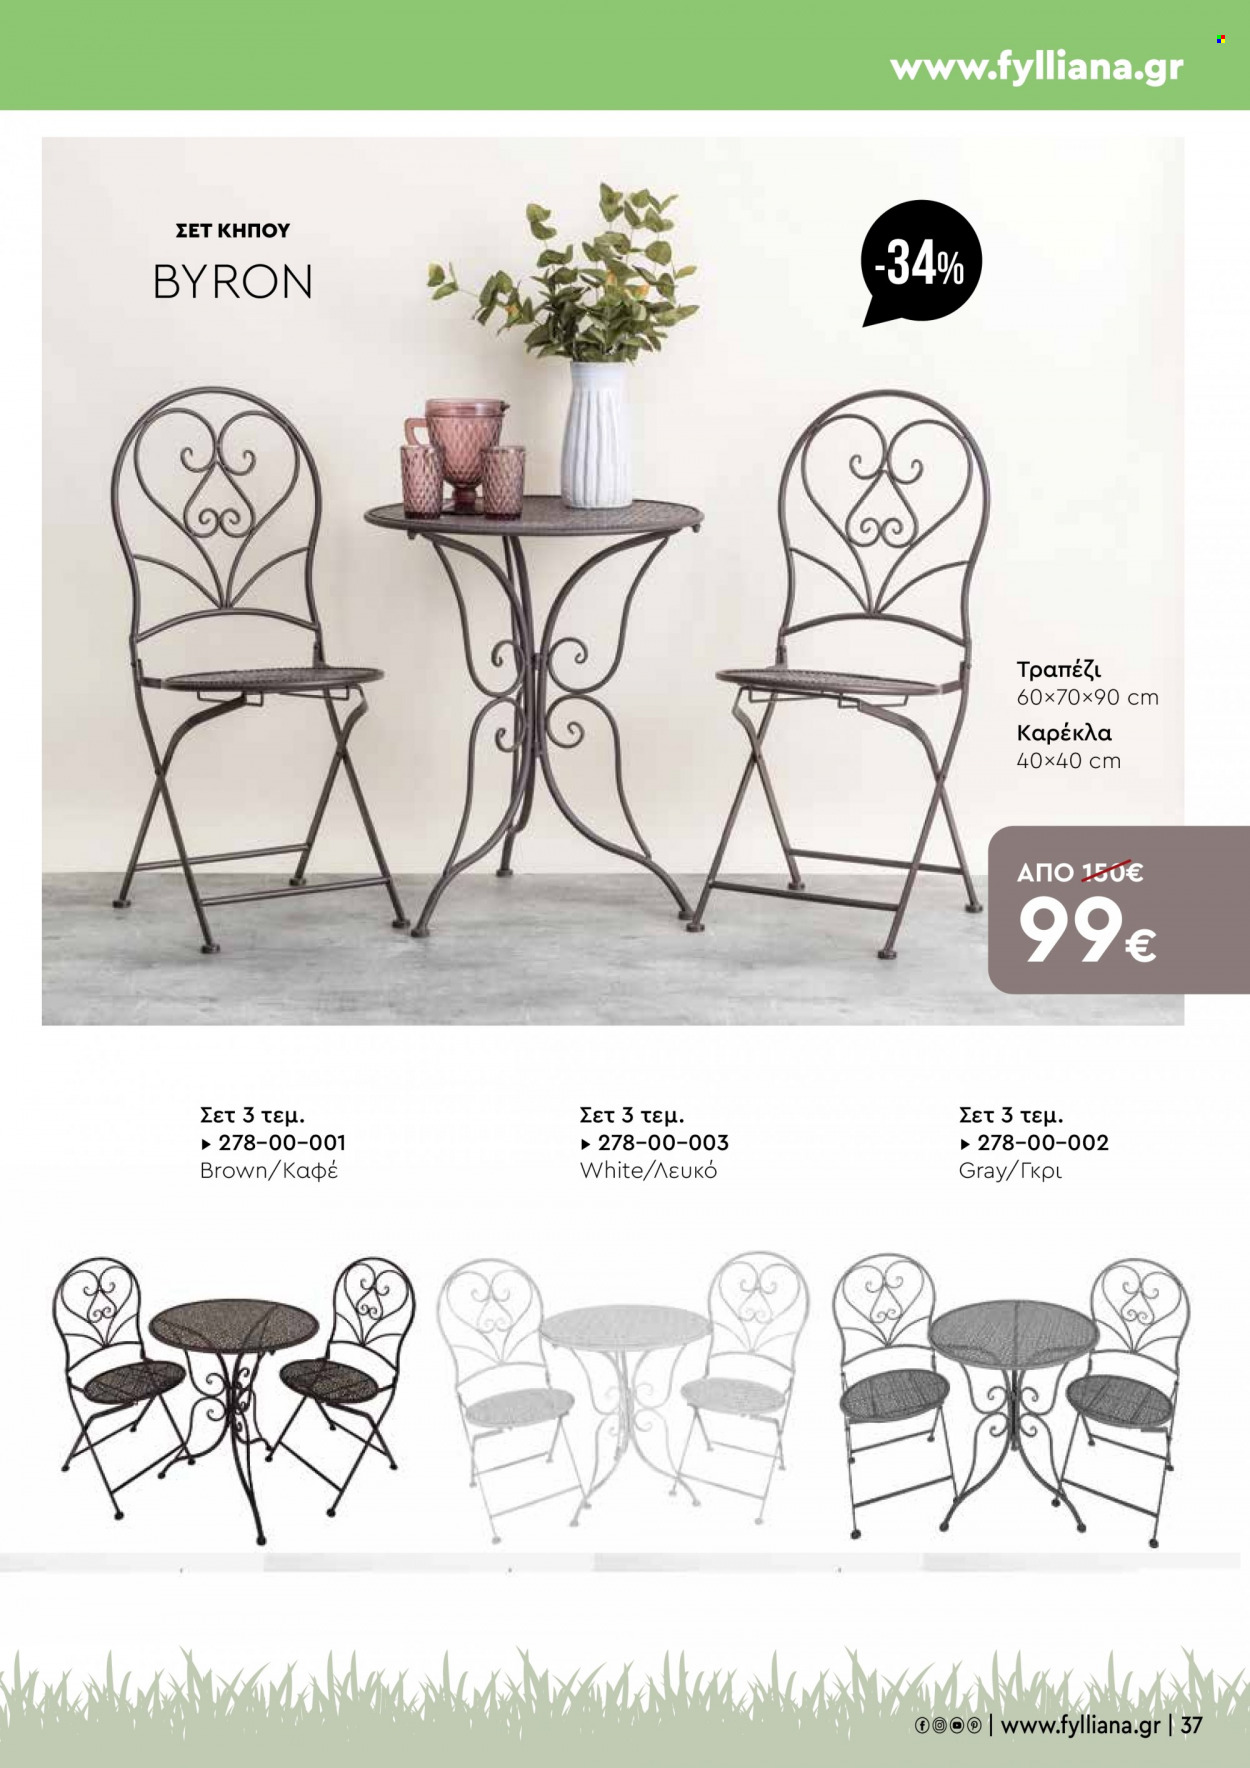 thumbnail - Φυλλάδια Fylliana - Εκπτωτικά προϊόντα - τραπέζι, καρέκλα. Σελίδα 37.